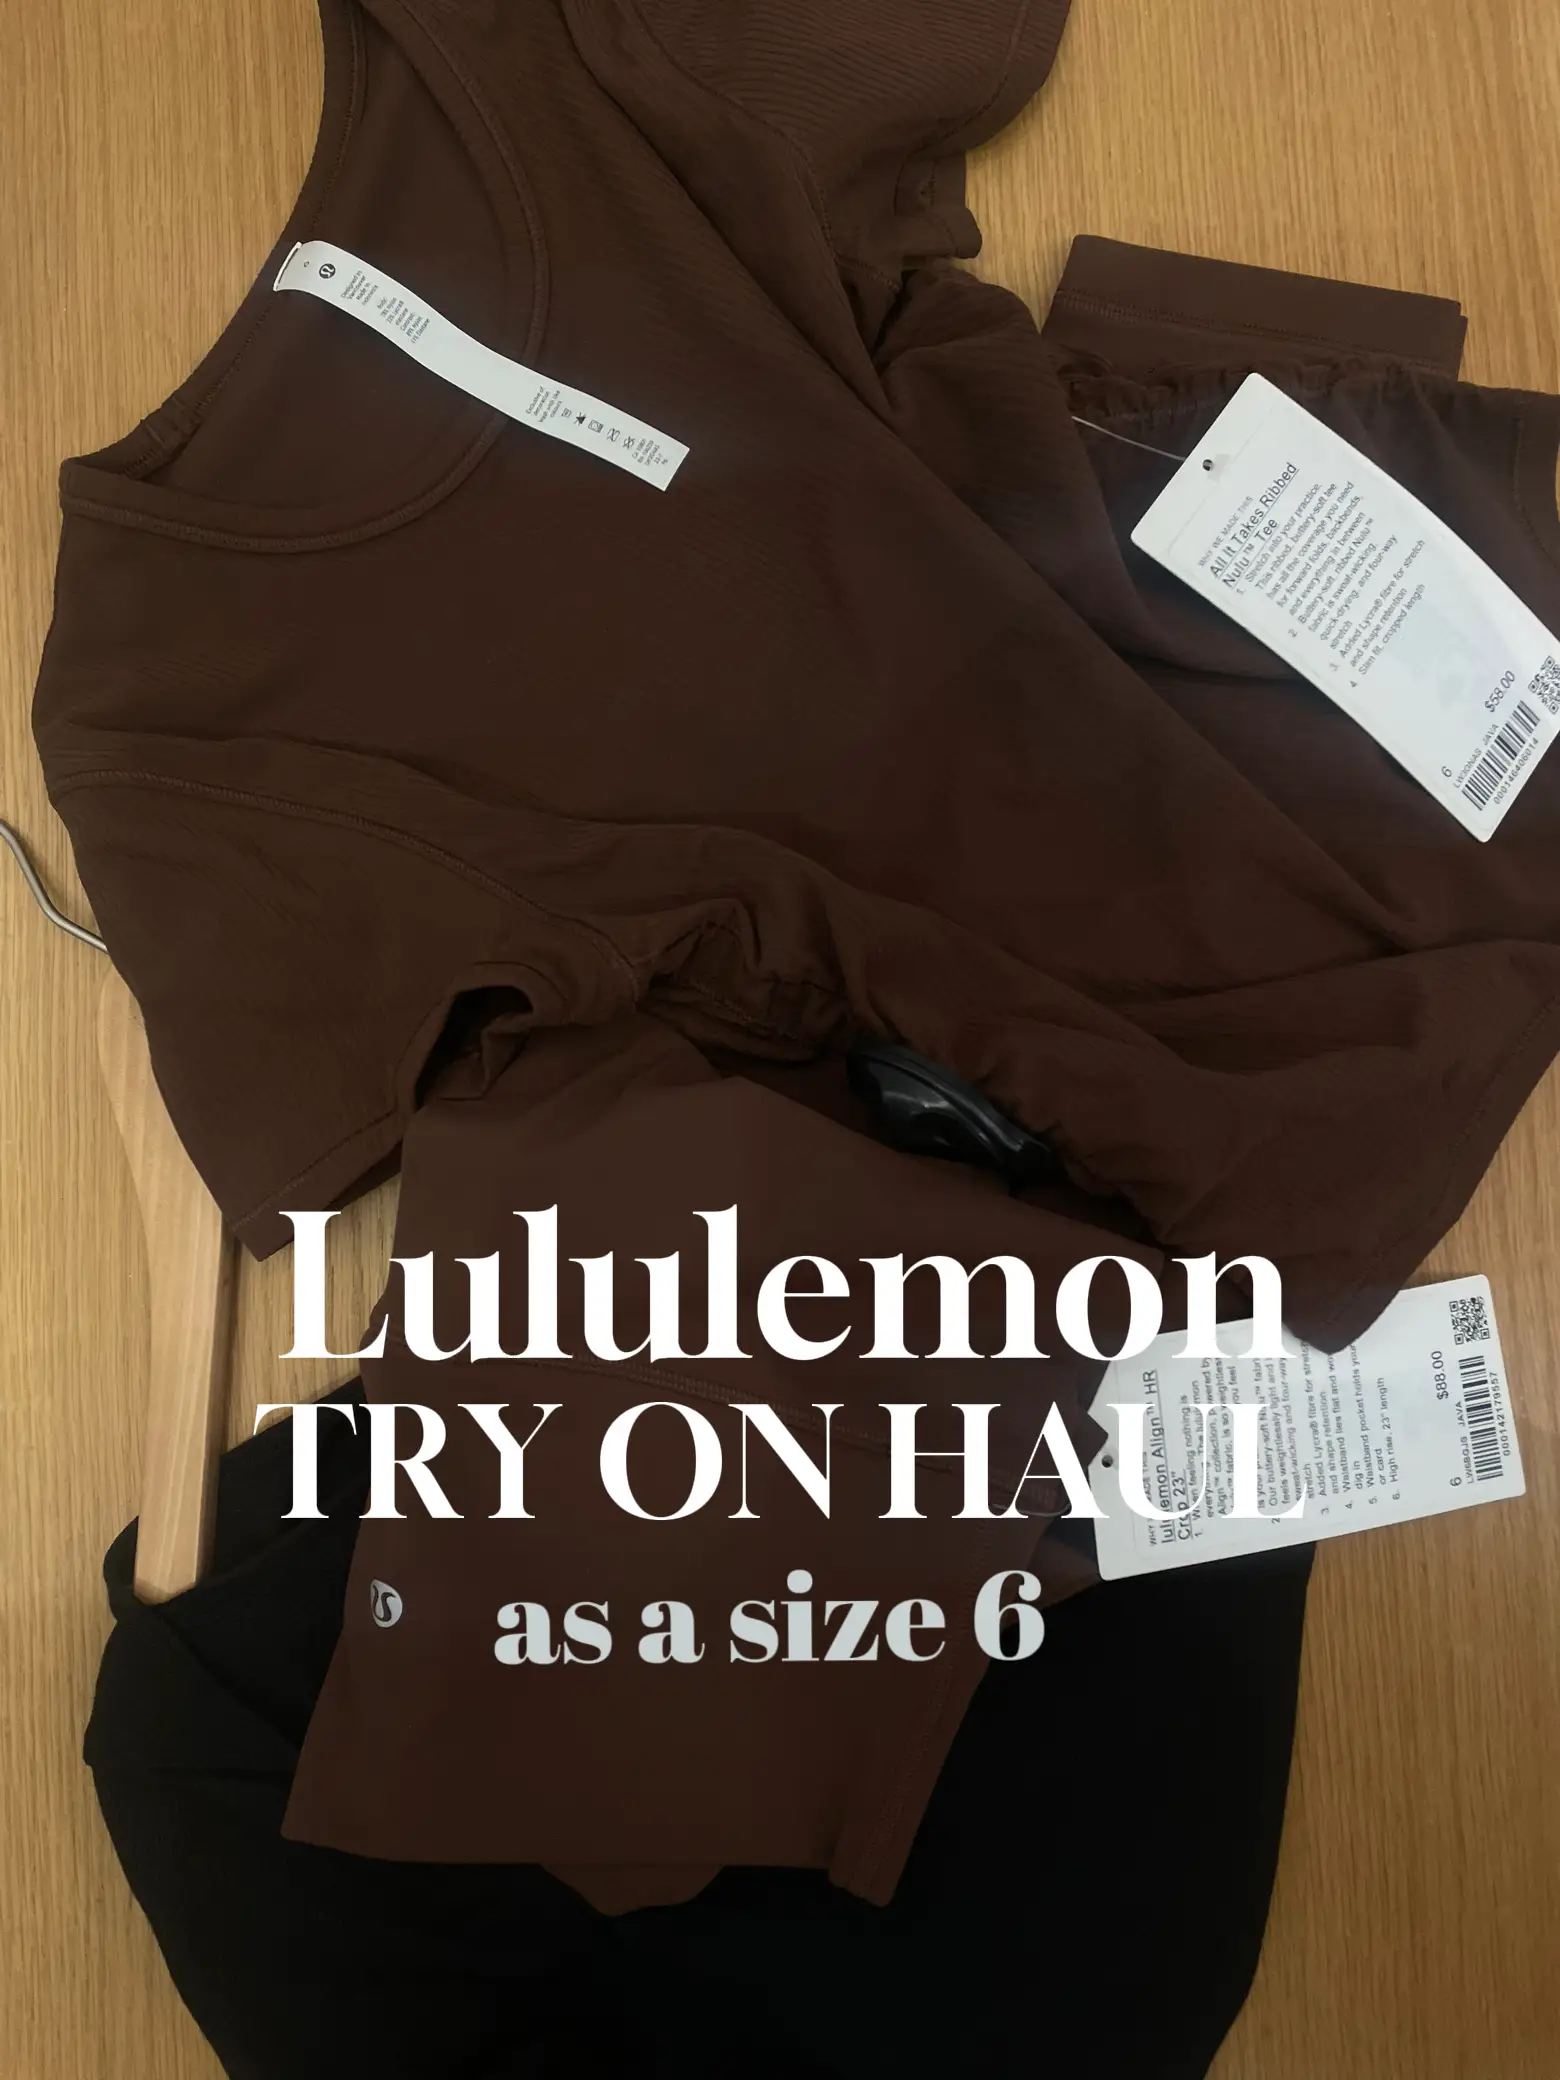 Lululemon haul, but make it curvy plus size mid size ❤️ Having